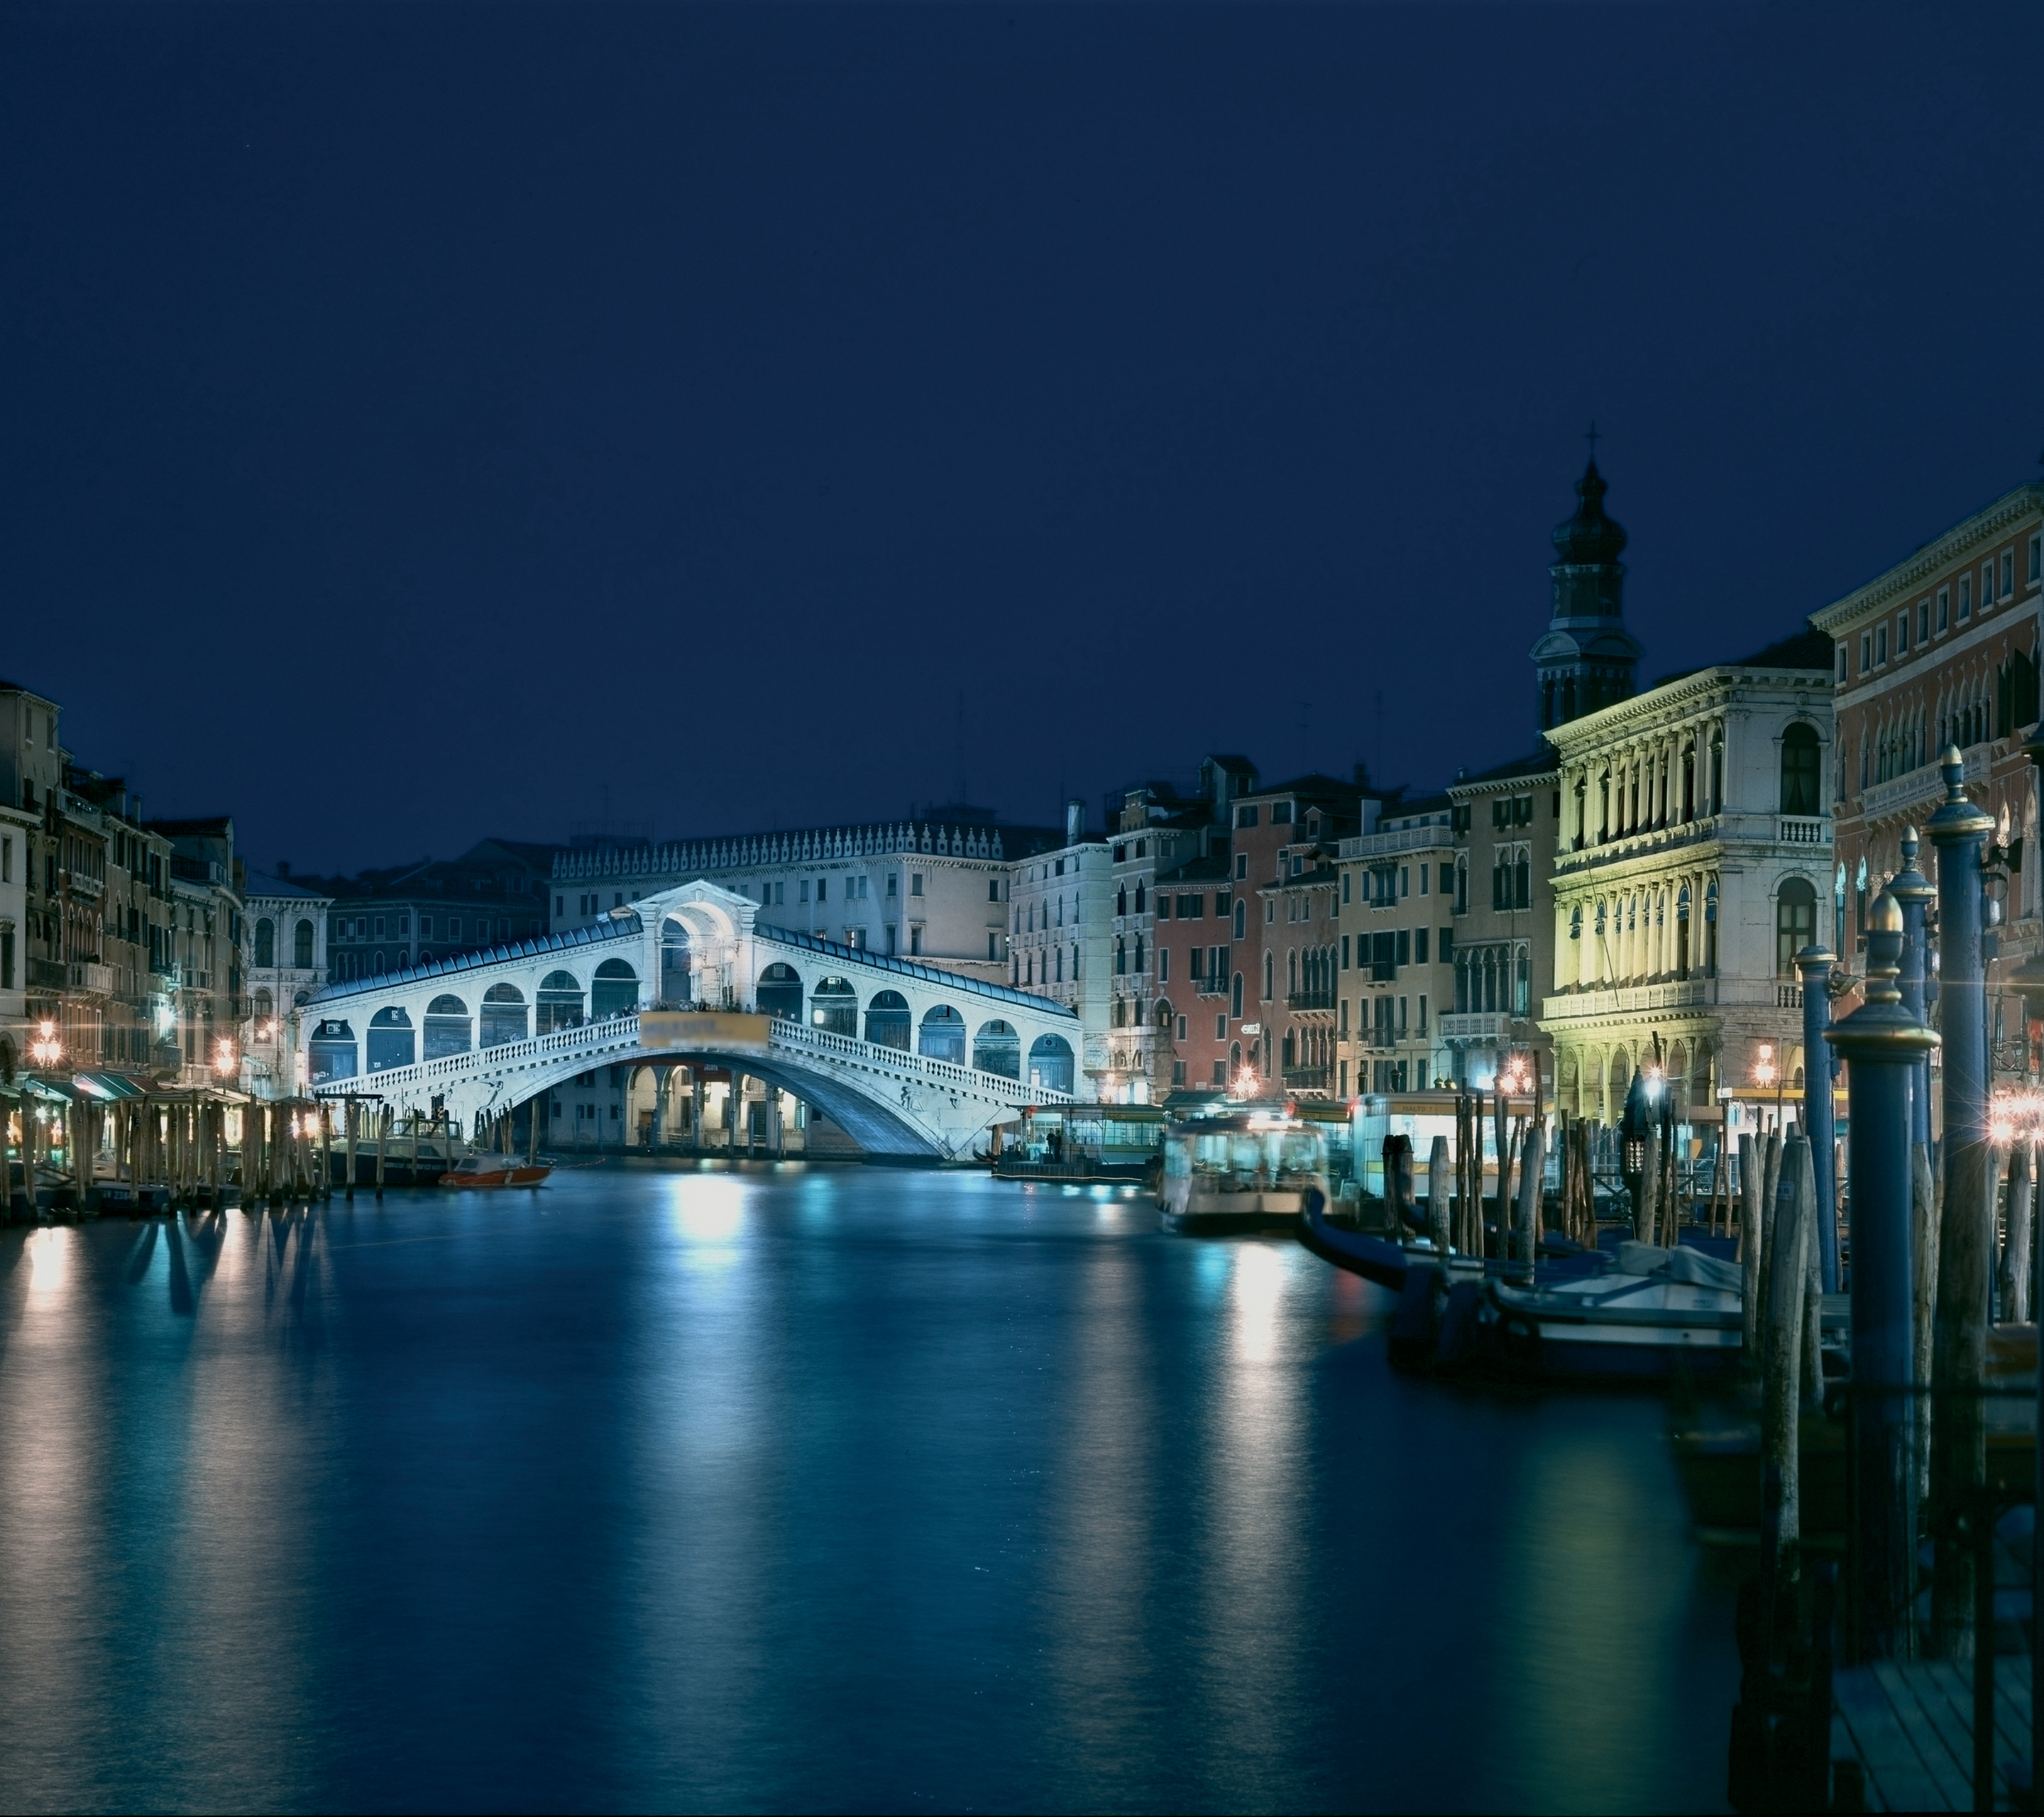 Город на реке в италии. Мост Риальто. Риалто в Италии. Архитектура Венеции мост Риальто. Венеция город в Италии.